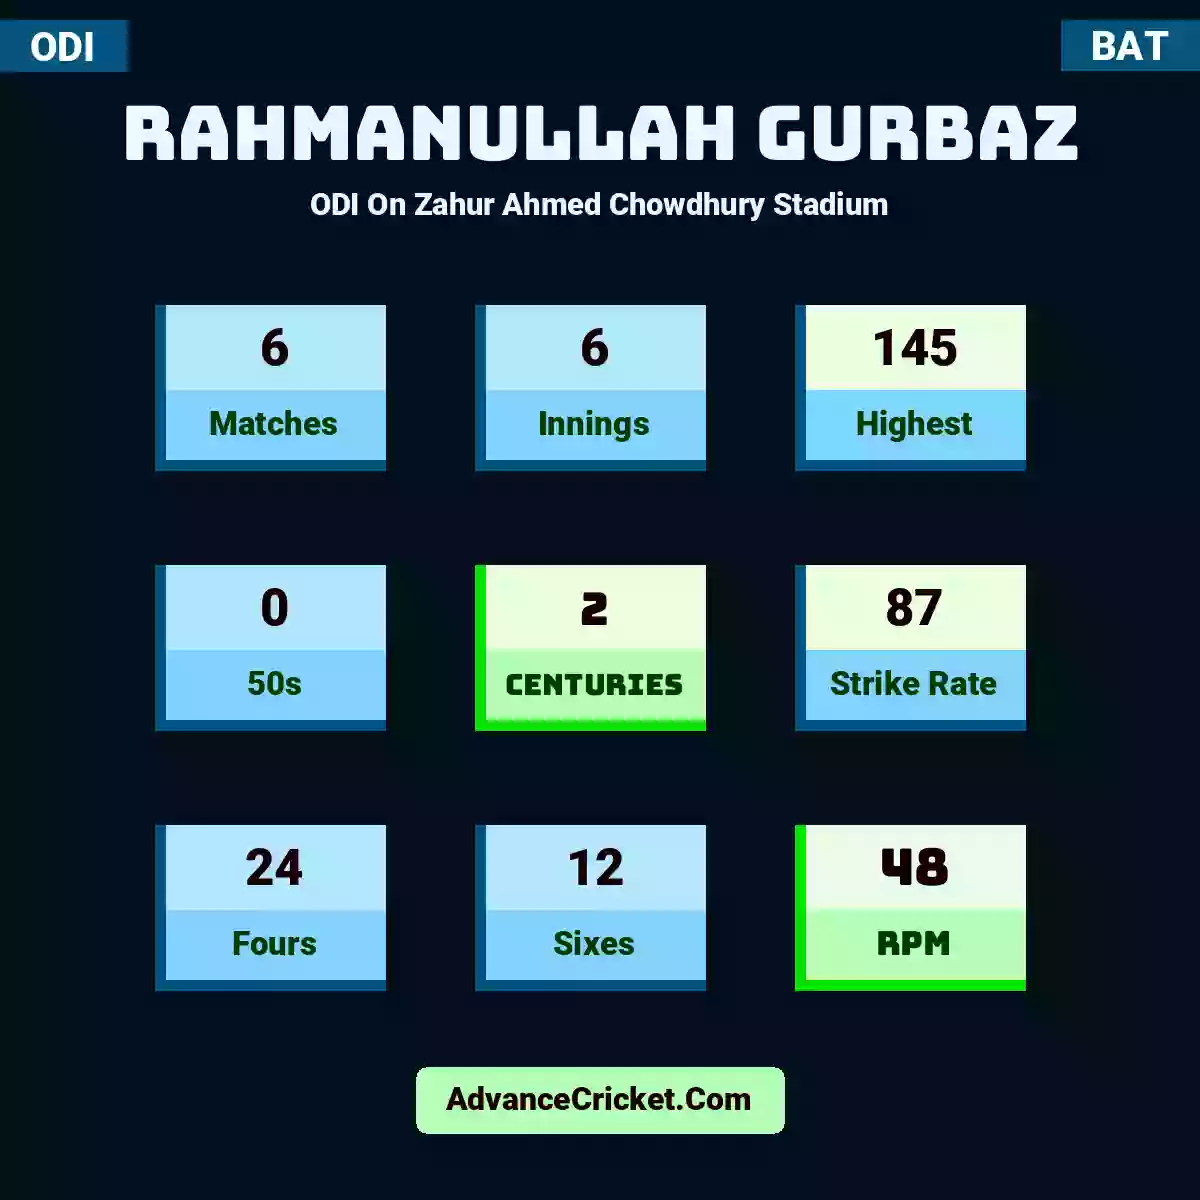 Rahmanullah Gurbaz ODI  On Zahur Ahmed Chowdhury Stadium, Rahmanullah Gurbaz played 6 matches, scored 145 runs as highest, 0 half-centuries, and 2 centuries, with a strike rate of 87. R.Gurbaz hit 24 fours and 12 sixes, with an RPM of 48.